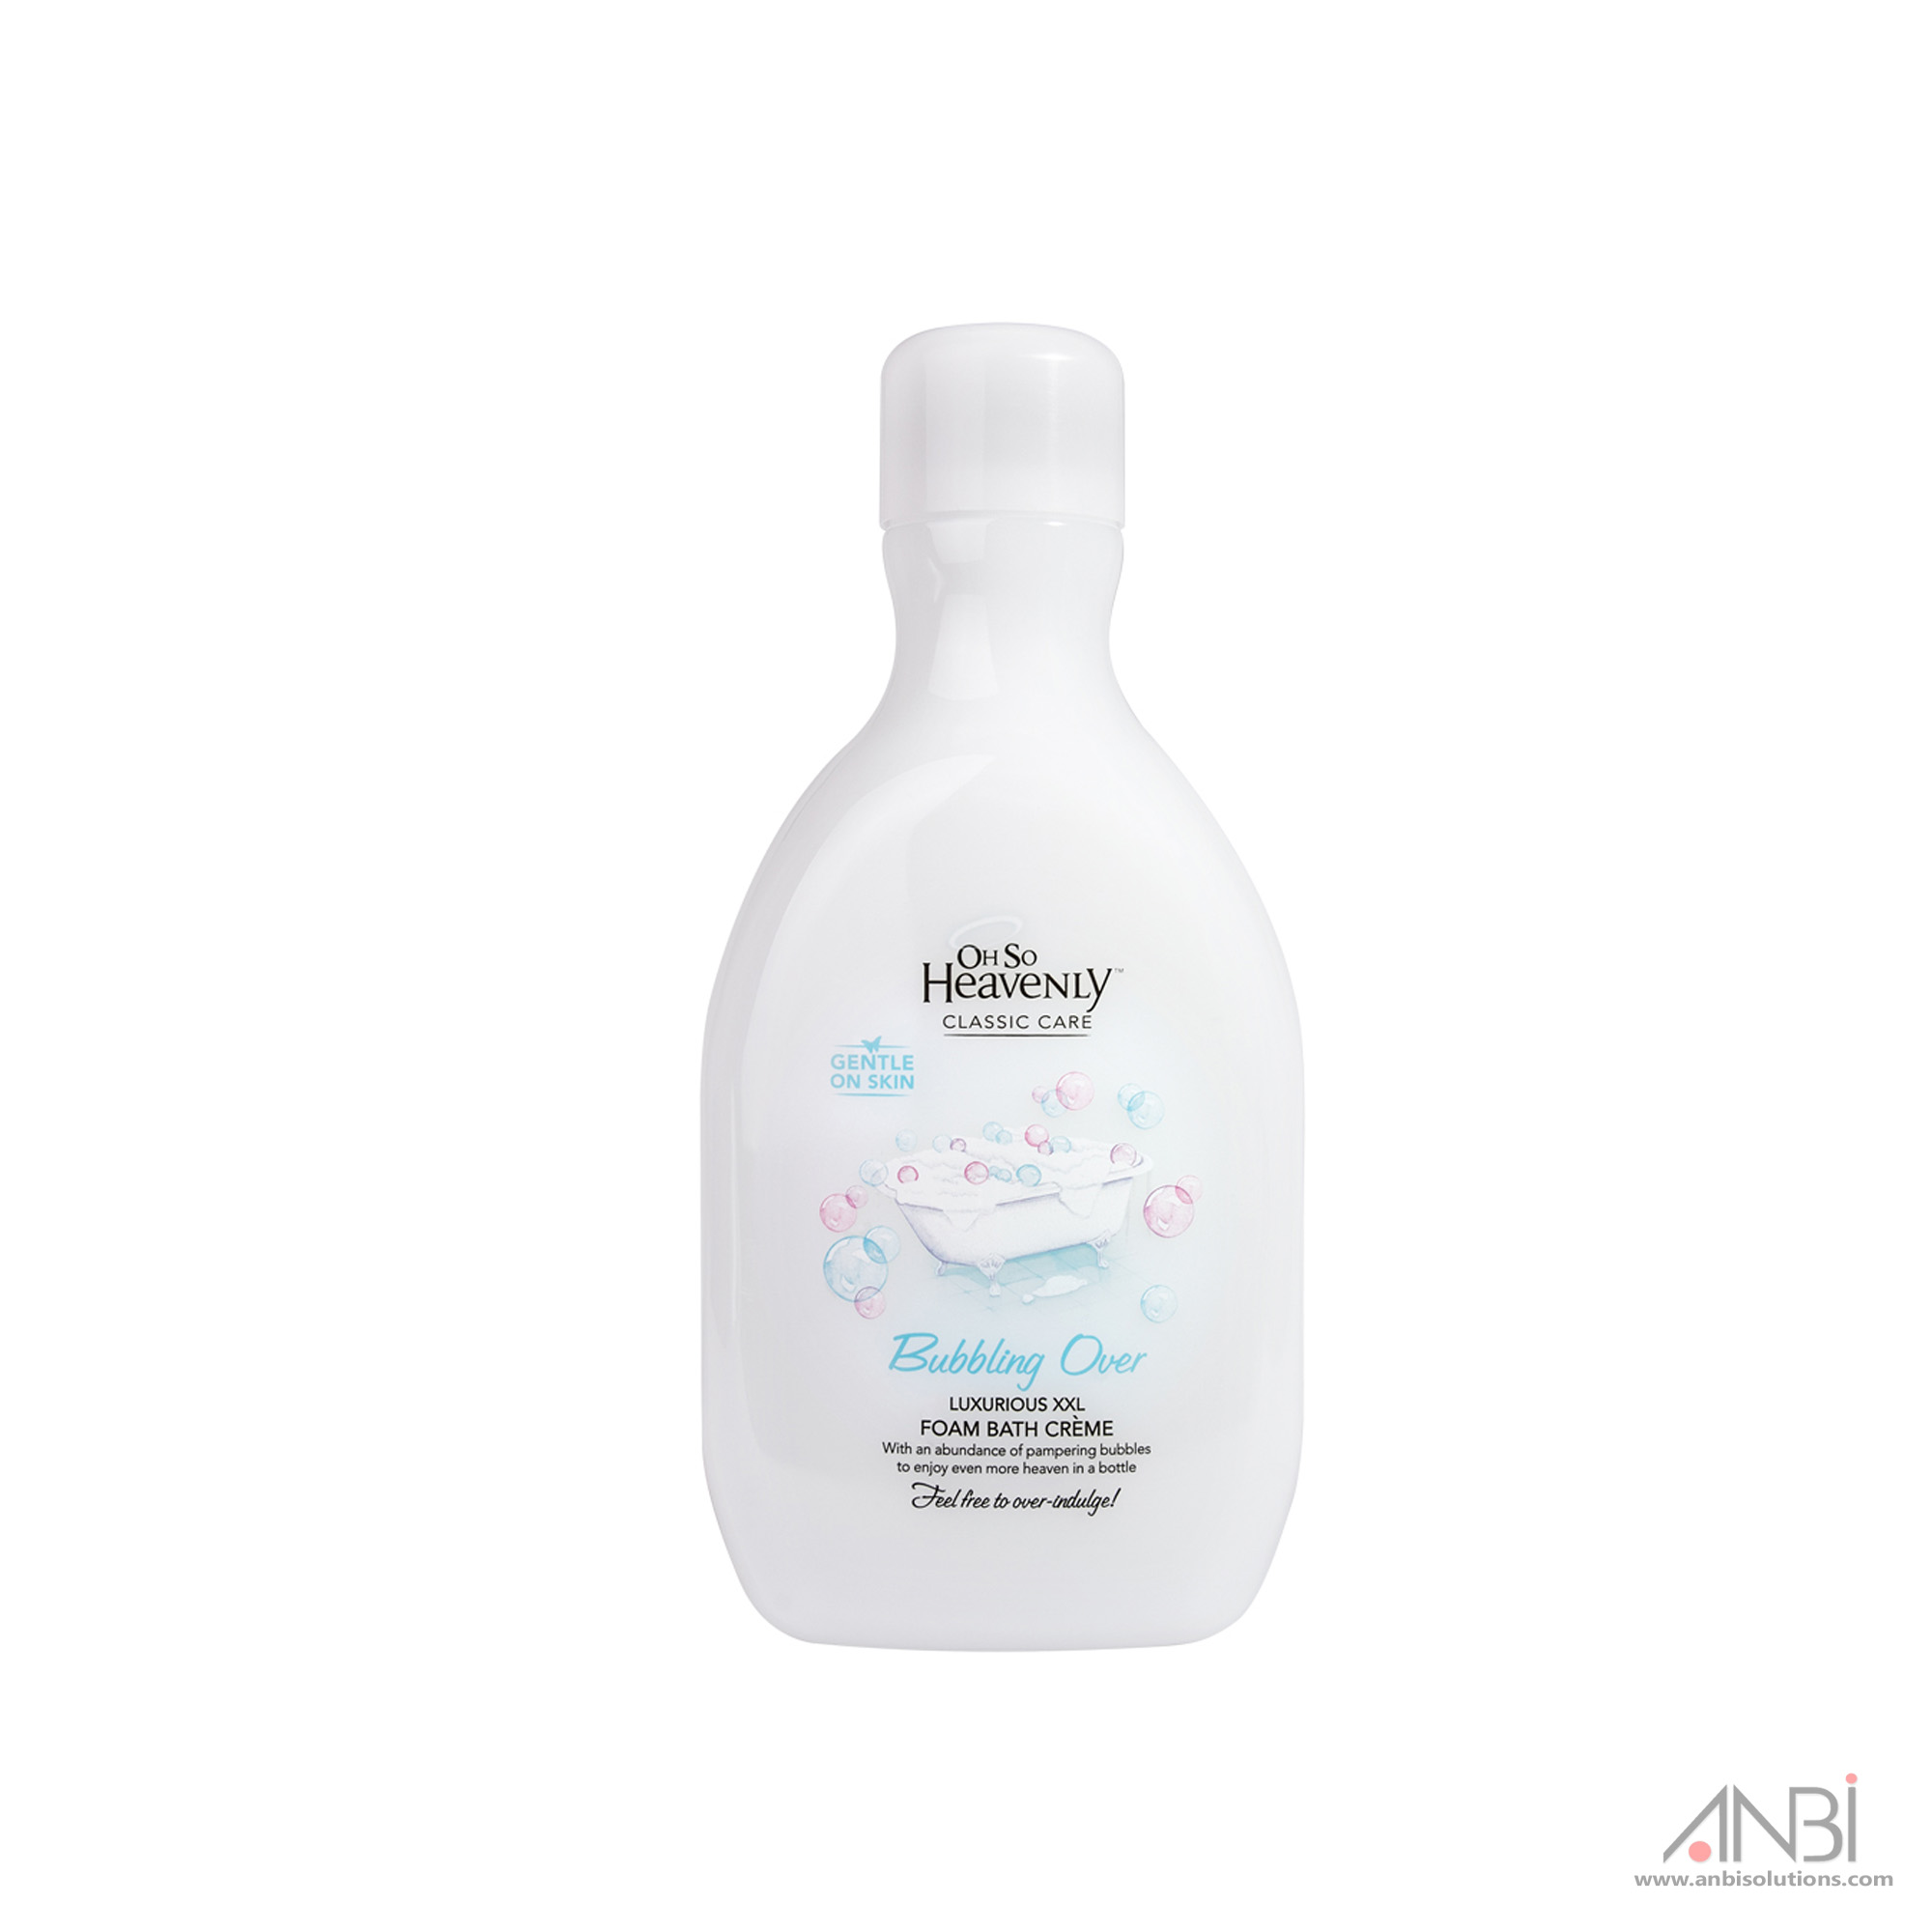 OH SO HEAVENLY Bubbling Over Luxurious XXL Foam Bath Crème 2L - ANBI Online